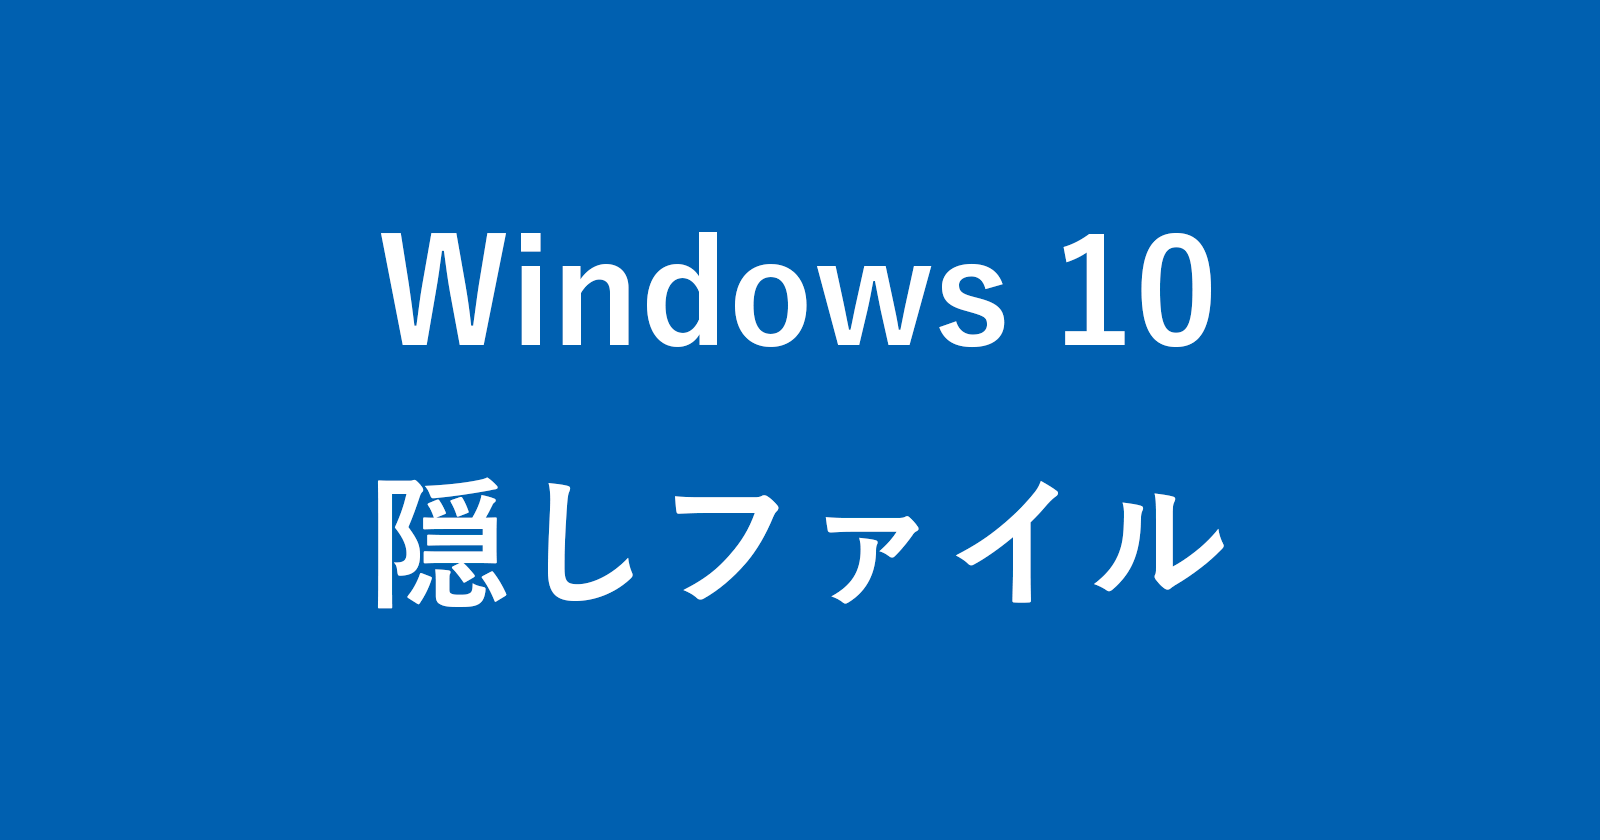 windows 10 hidden files folders